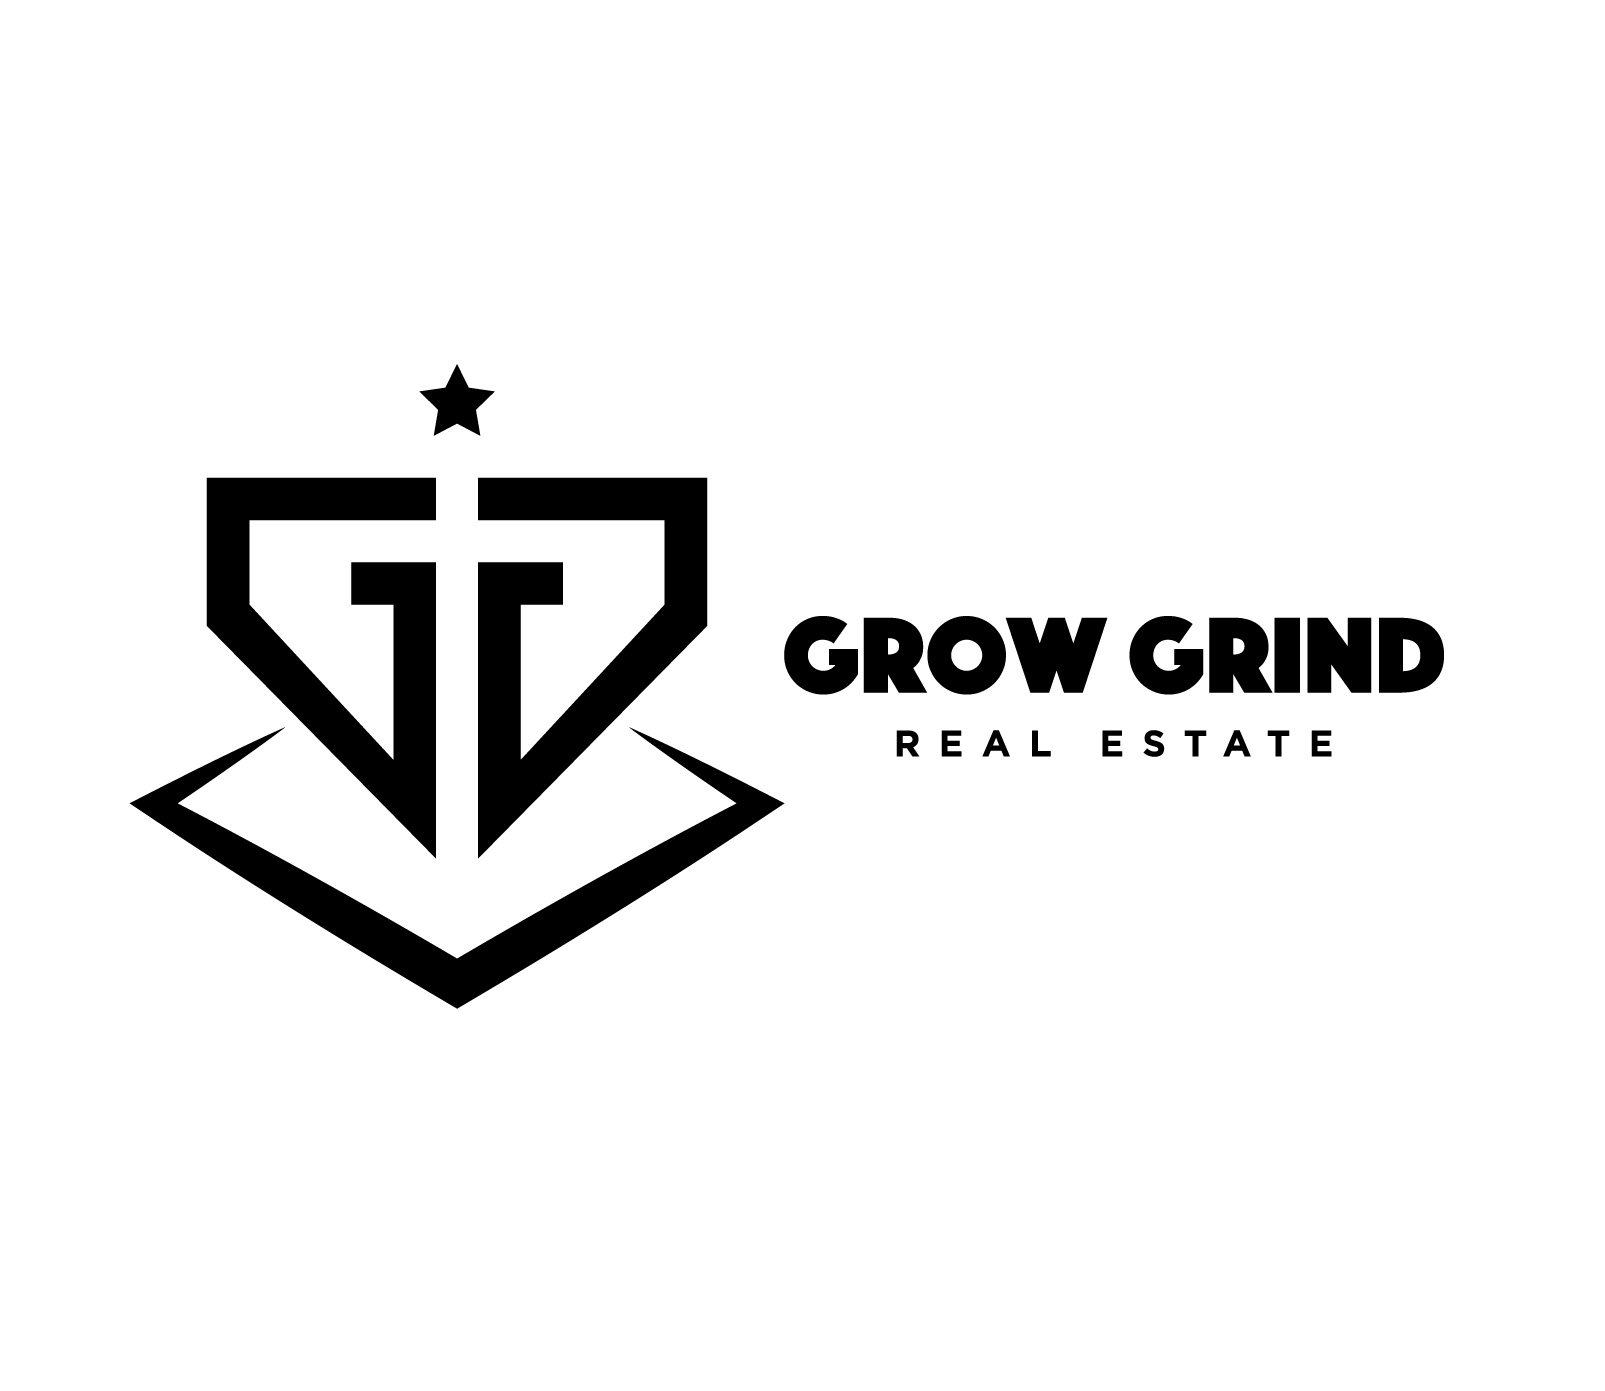 Grow Grind real estate